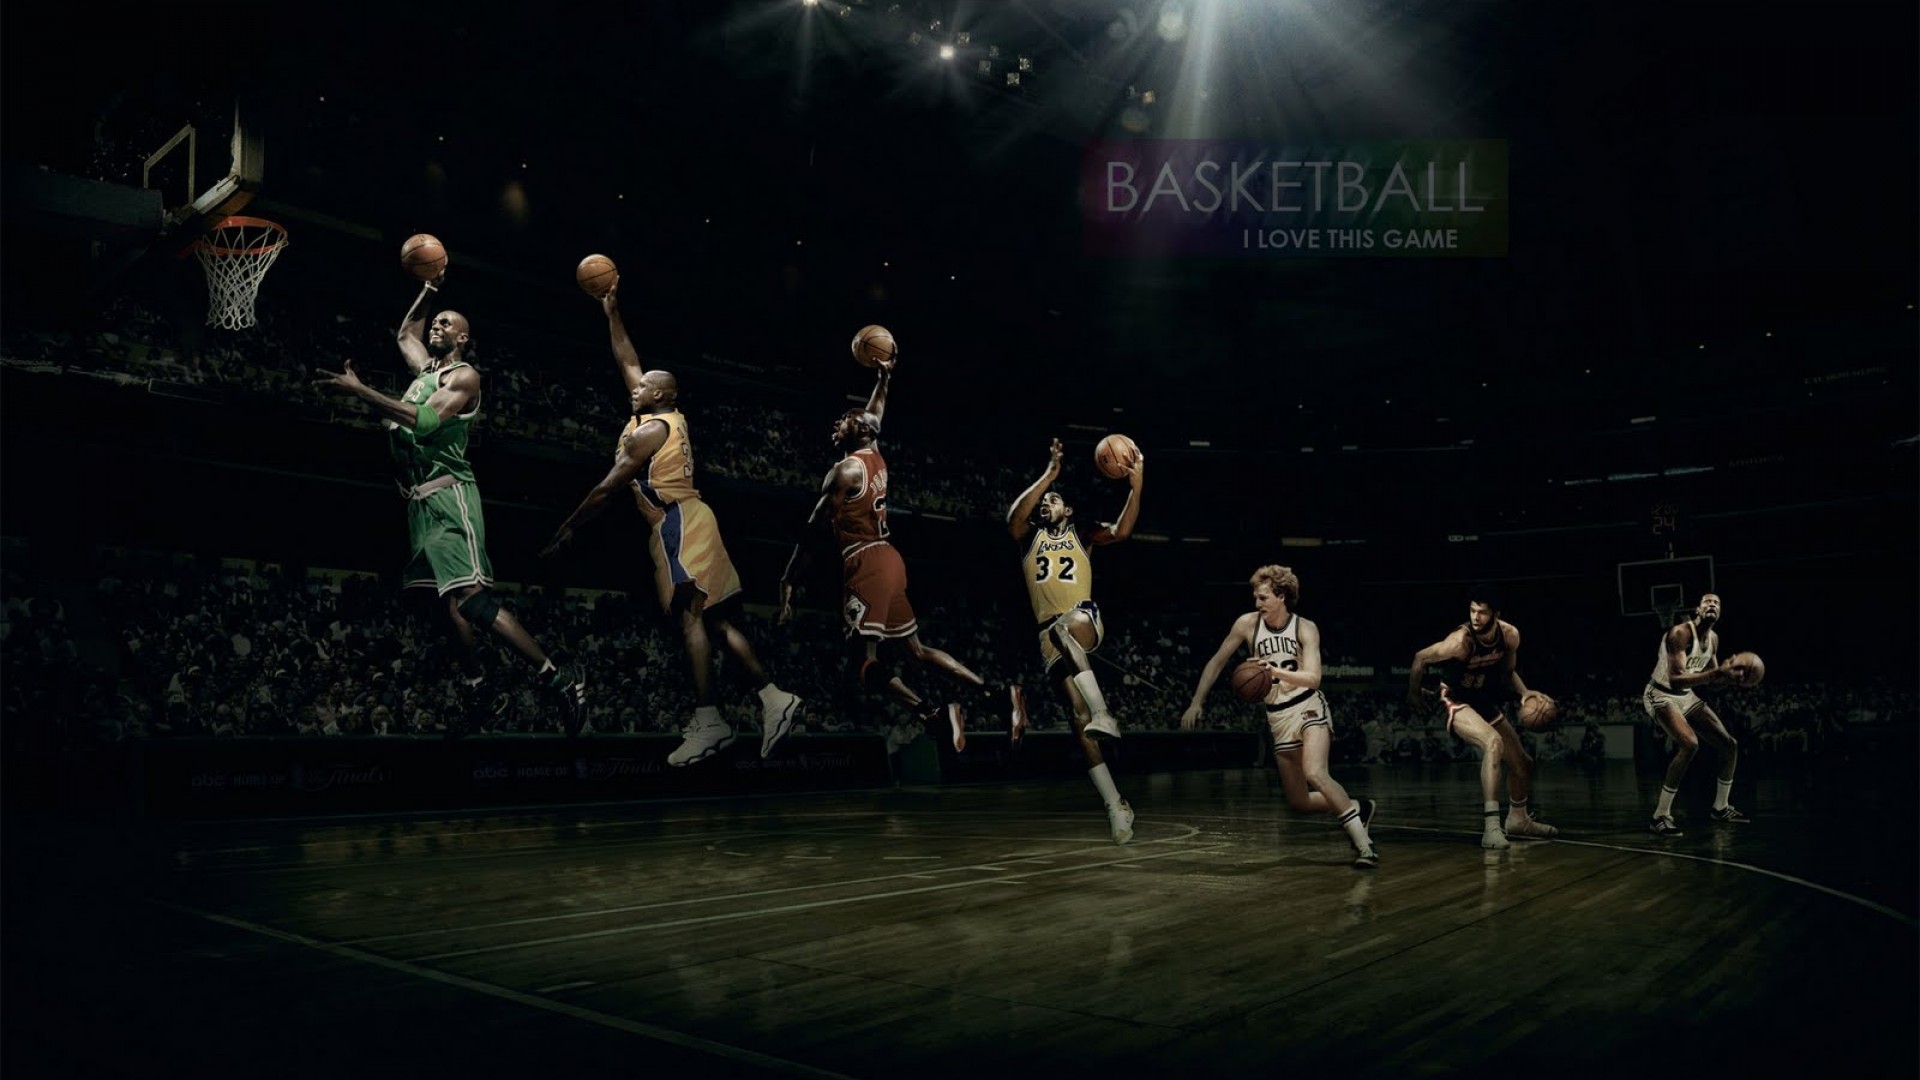 1920x1080 ... basketball hd wallpapers on wallpaperget com ...